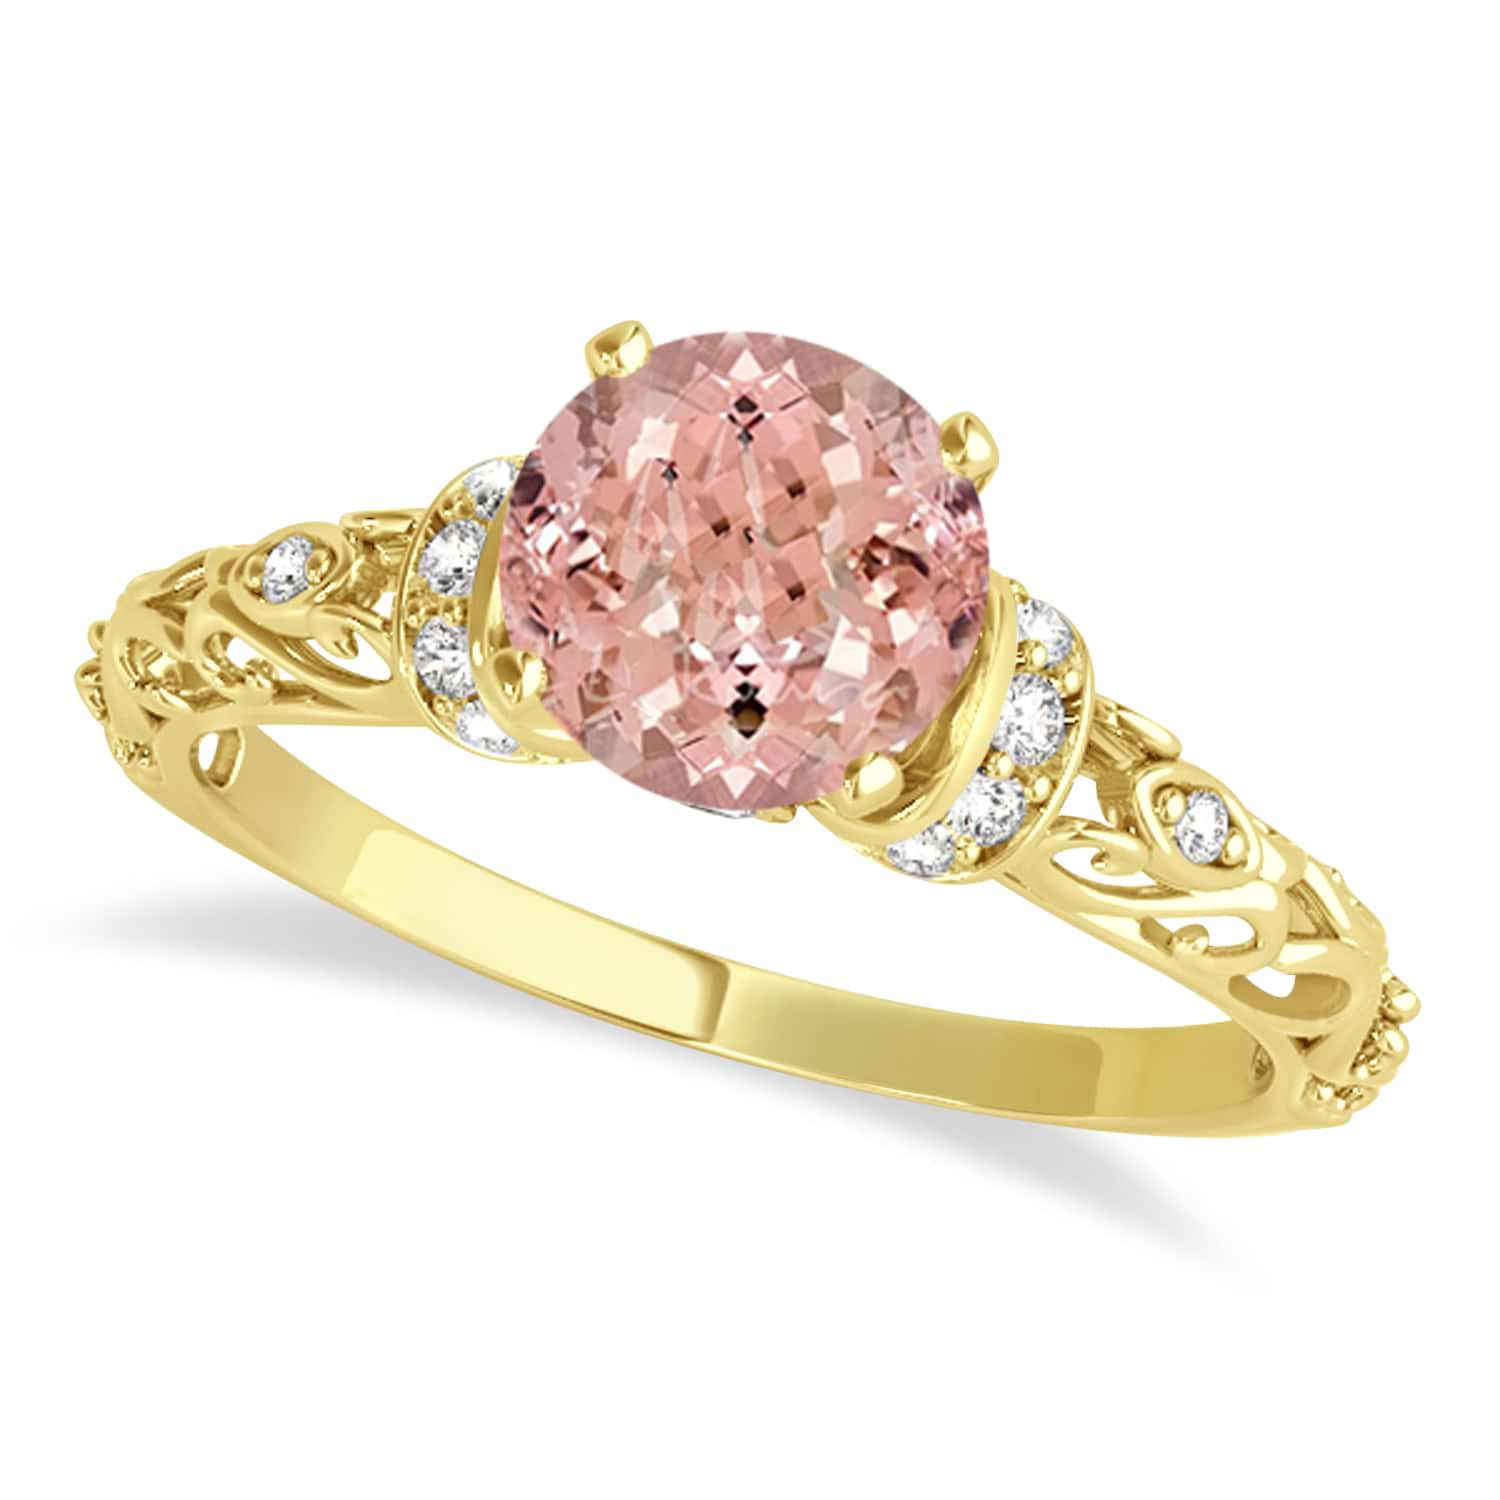 Morganite & Diamond Antique Engagement Ring 14k Yellow Gold (1.62ct)